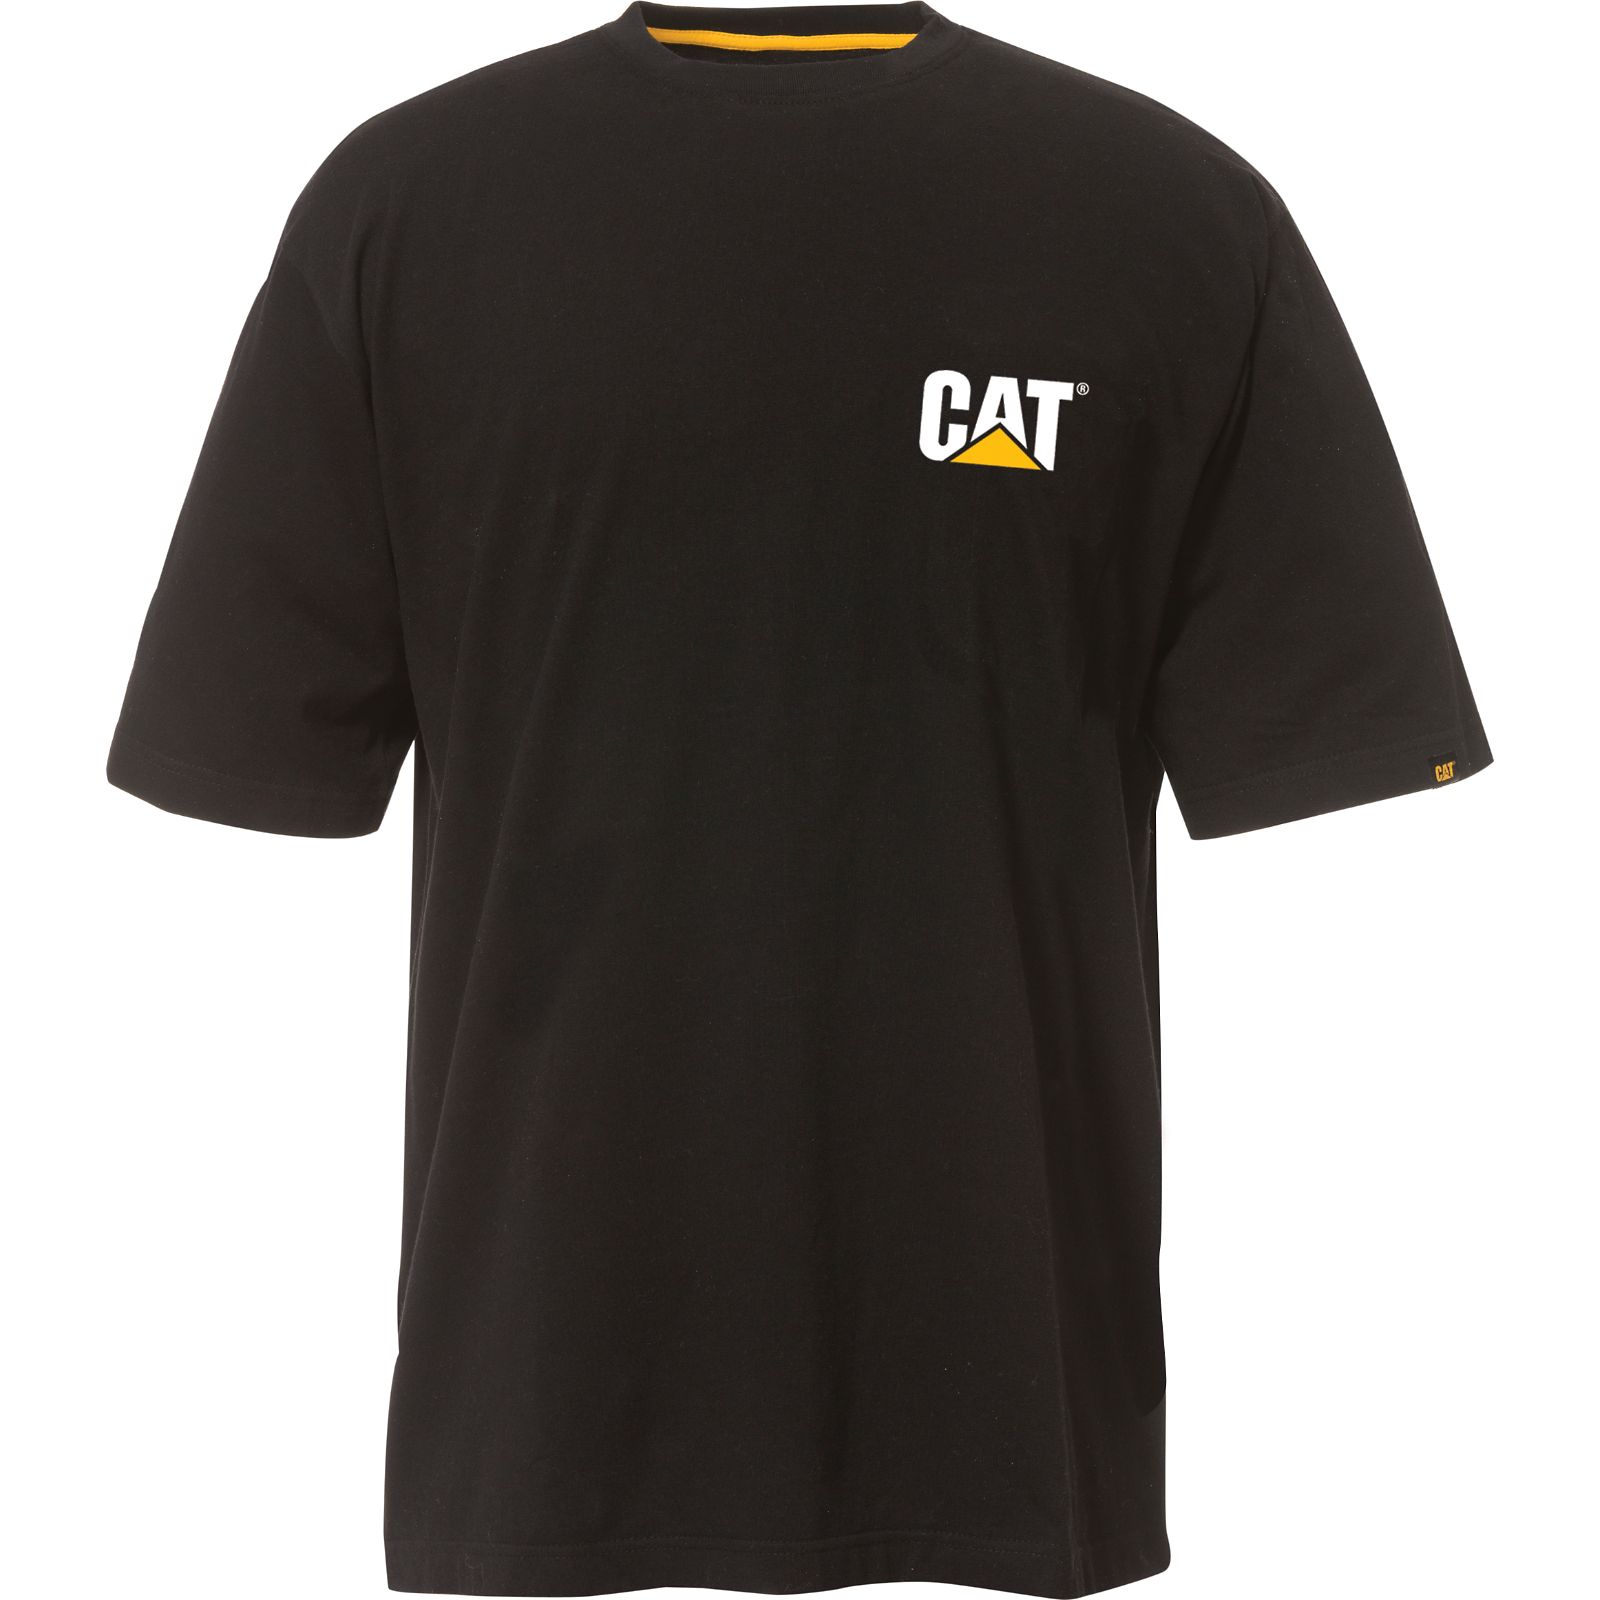 Caterpillar Clothing Online - Caterpillar Trademark Mens T-Shirts Black (403952-IWK)